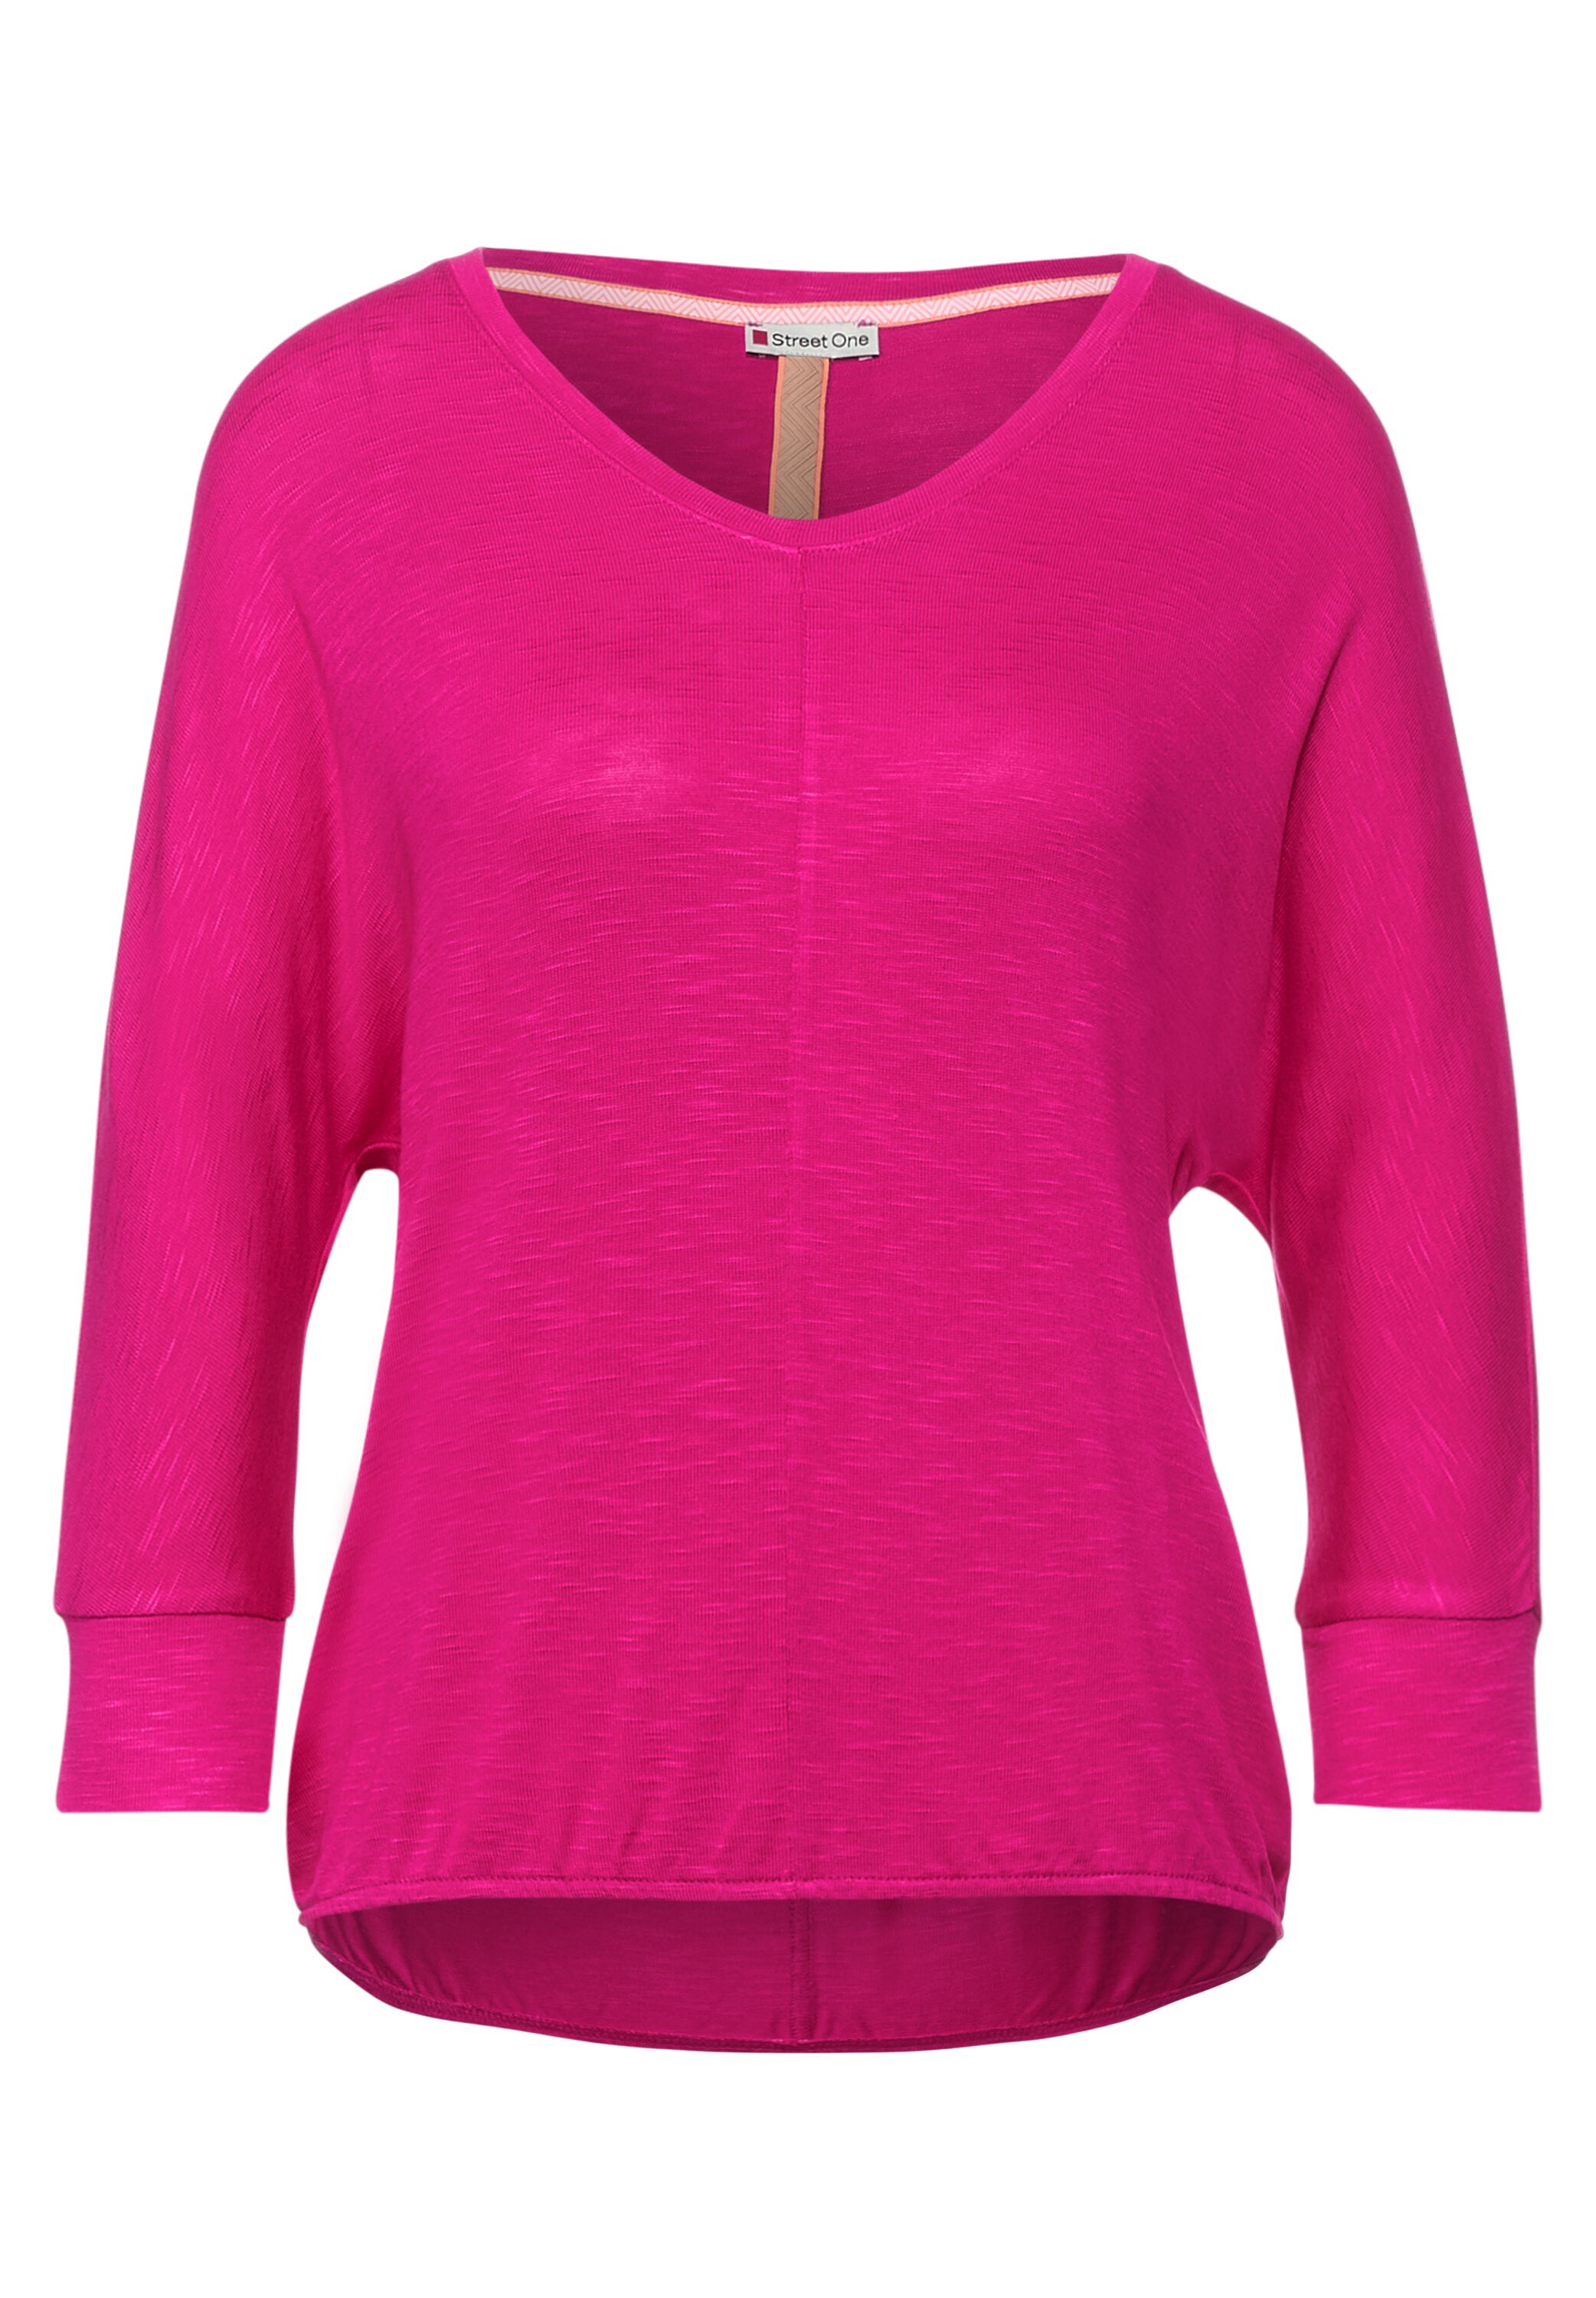 Ellen Street One in SALE Shirt CONCEPT - Powerful reduziert Mode im Pink A317573-13611